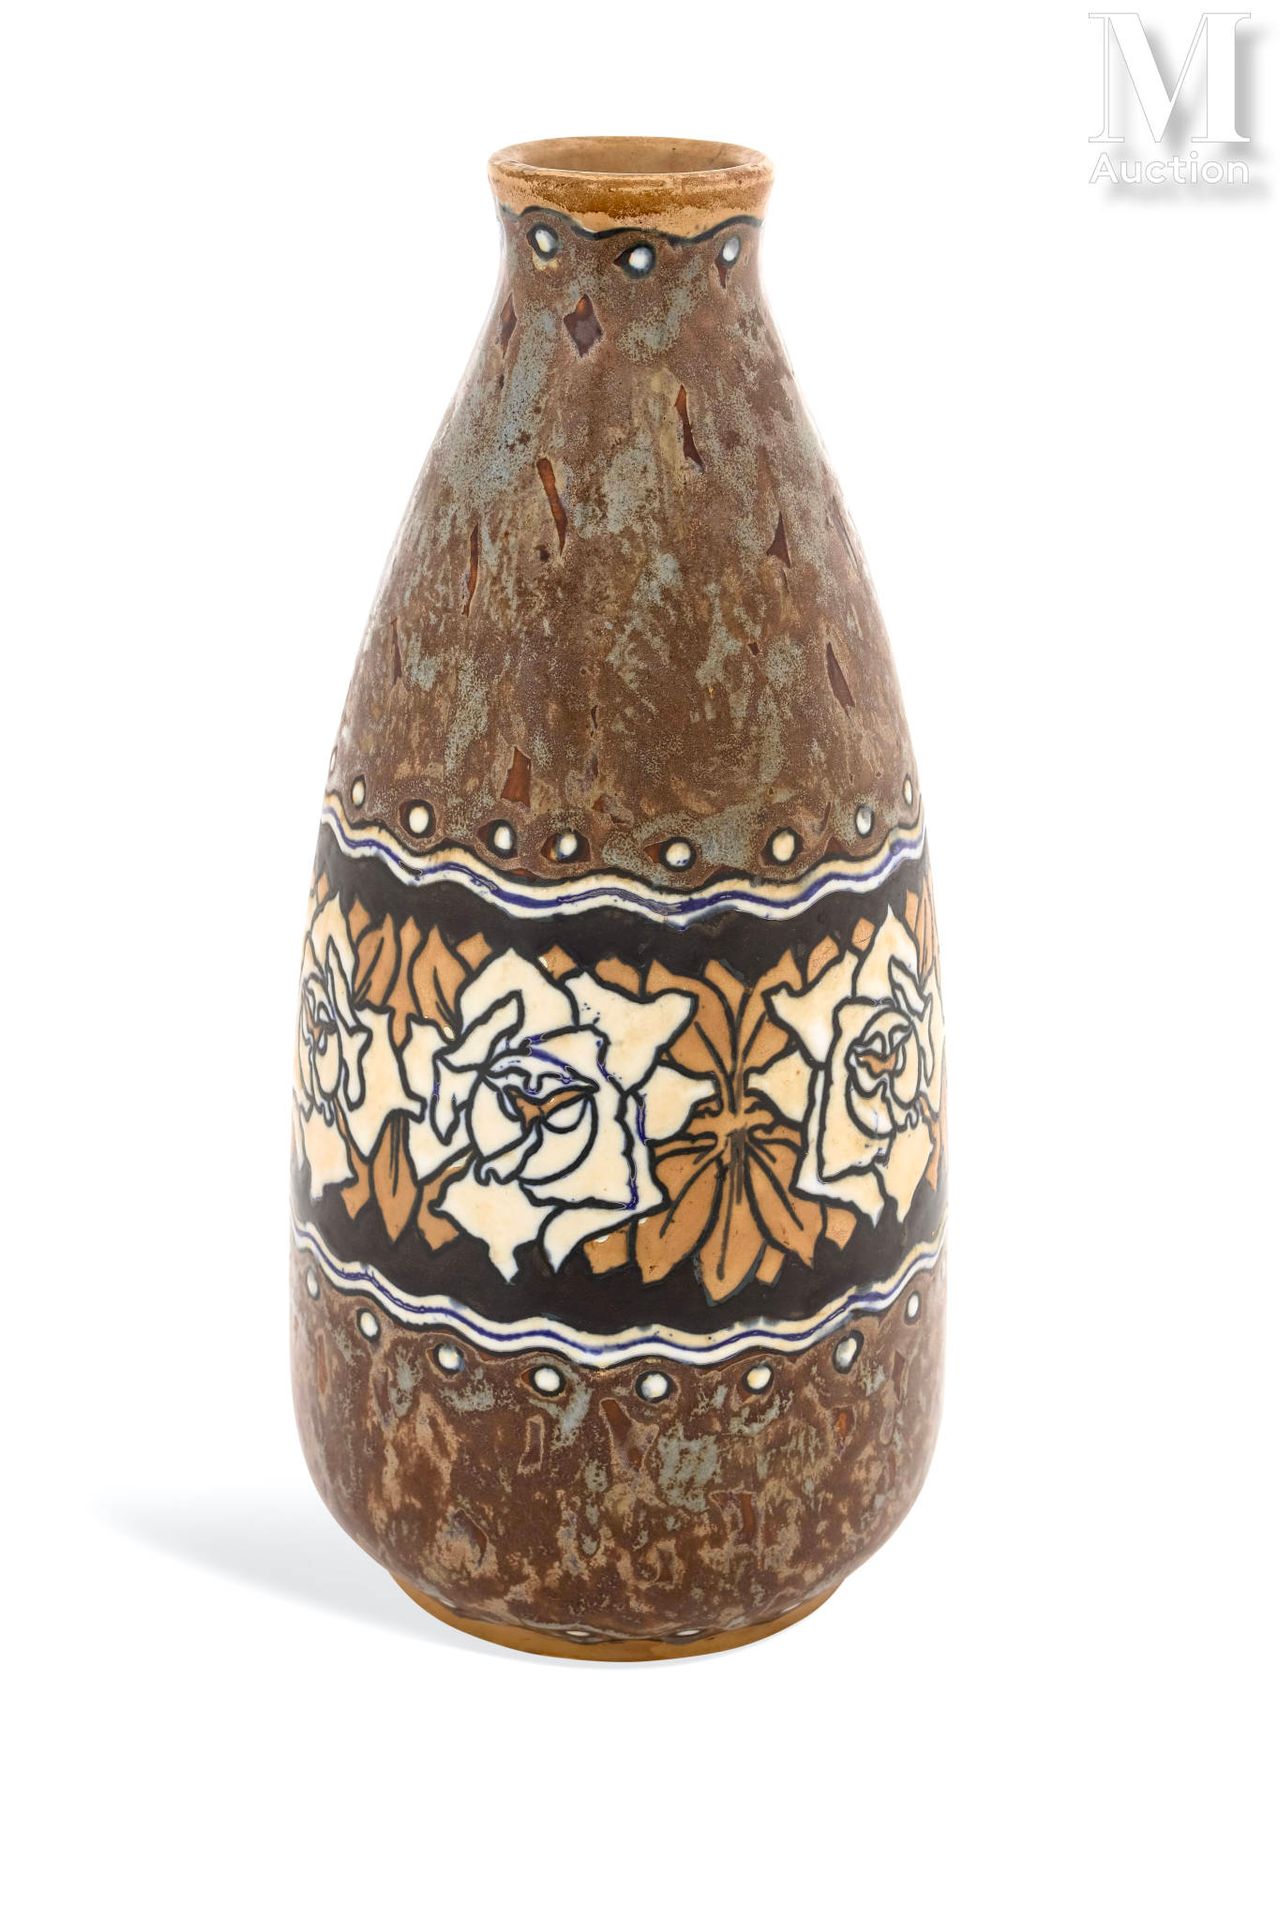 KERAMIS 花瓶
炻器，棕色背景上有多色花朵装饰 
二十世纪
底座下刻有 "Grès KERAMIS G D.622"，空心：898
高度：28.5 厘米